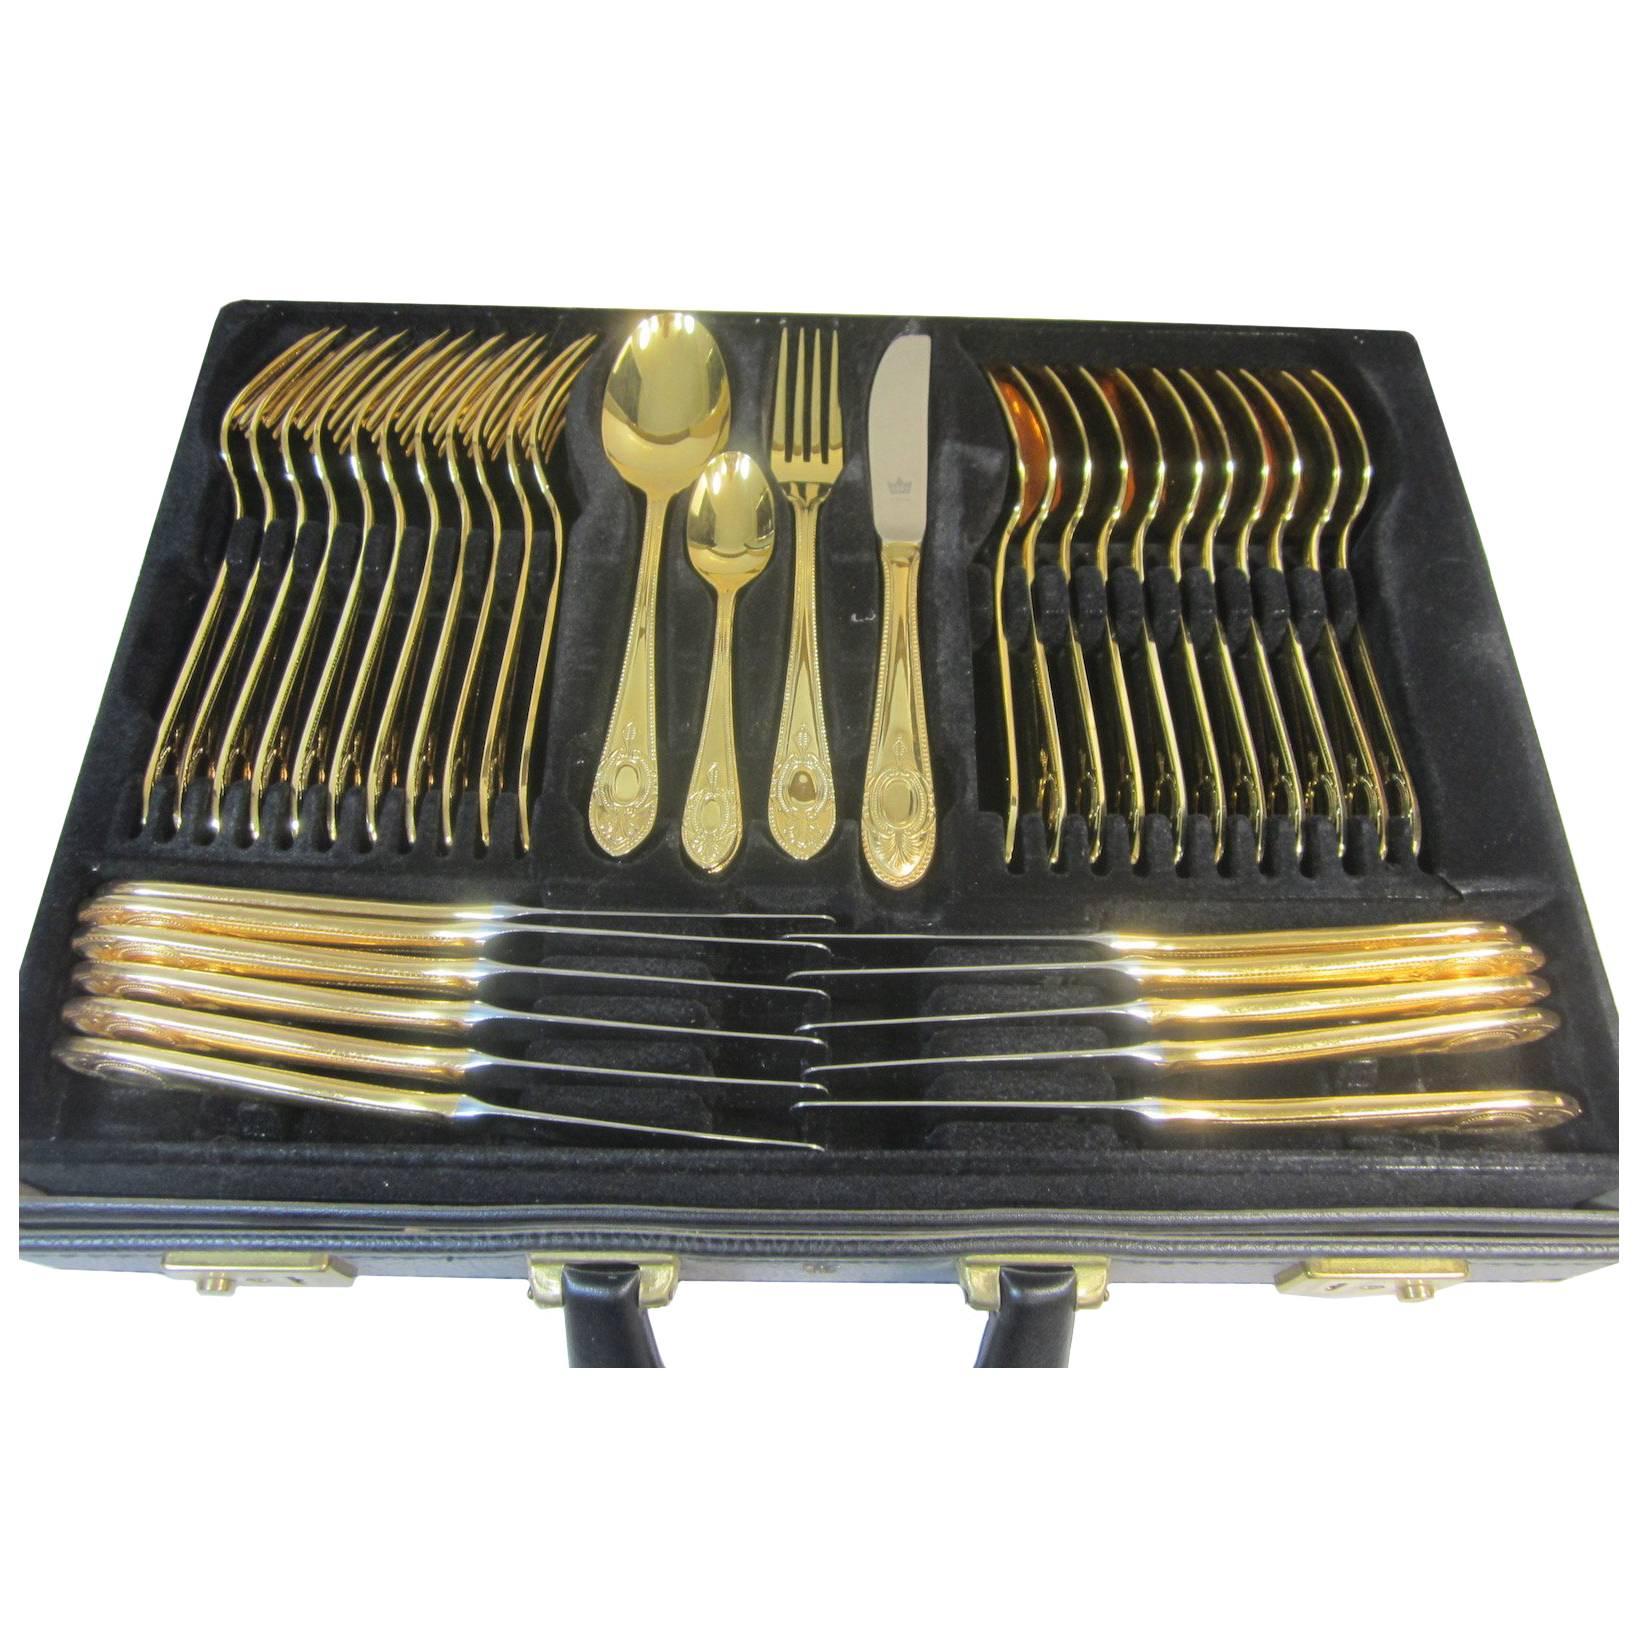 Bestecke Solingen German 23-24-Karat Gold-Plated 12 Person Cutlery Set